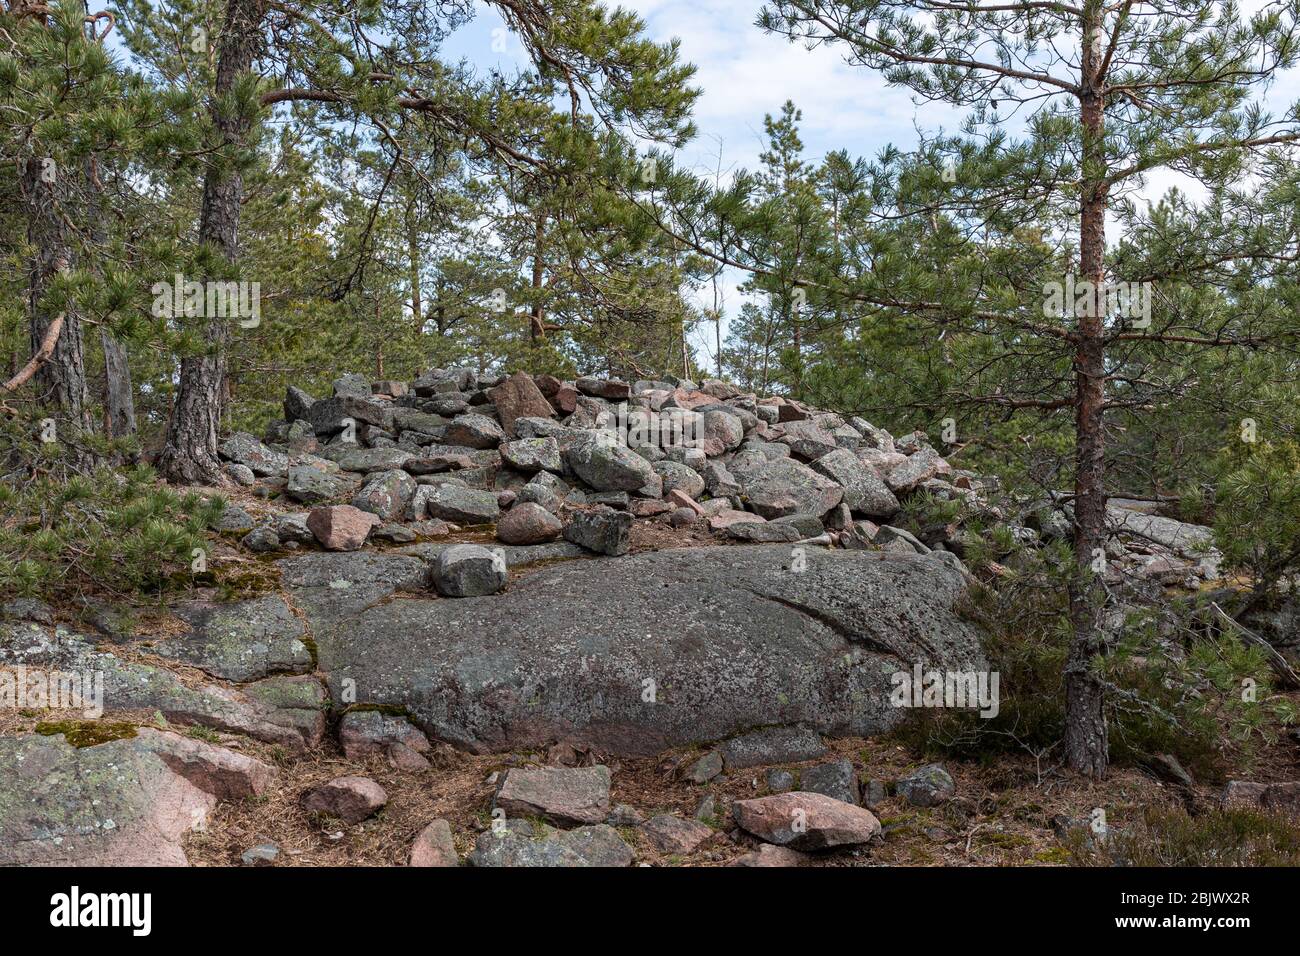 Hiidenkiuas, pre-historic cairn grave, along the Hanikka hike trail iin Espoo, Finland Stock Photo